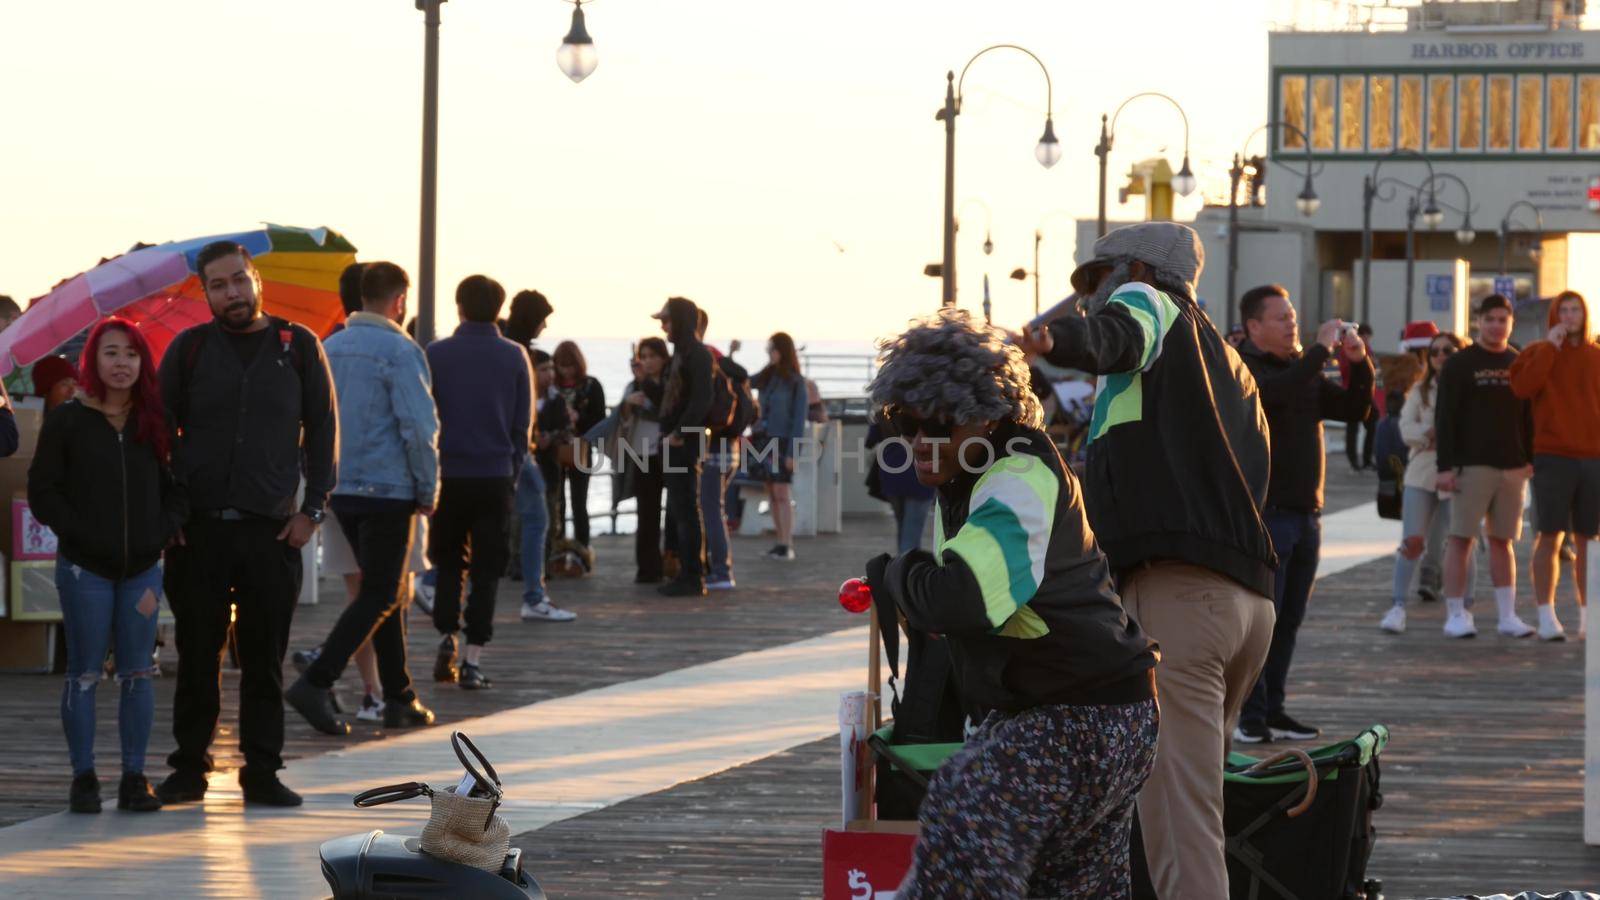 SANTA MONICA, LOS ANGELES CA USA - 19 DEC 2019: African american street performer dancing on boardwalk. Two black ethnicity positive dancers having fun. Pier promenade, smiling multiethnic pedestrians